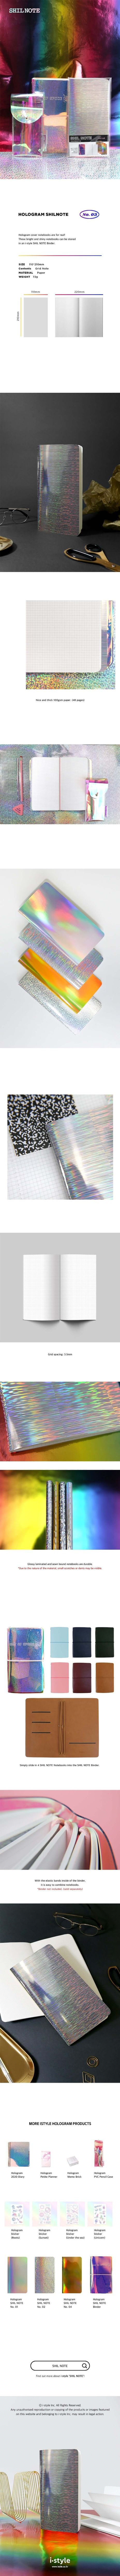 Shil Note Hologramm-Notizbuch + Aufkleber-Set (03)